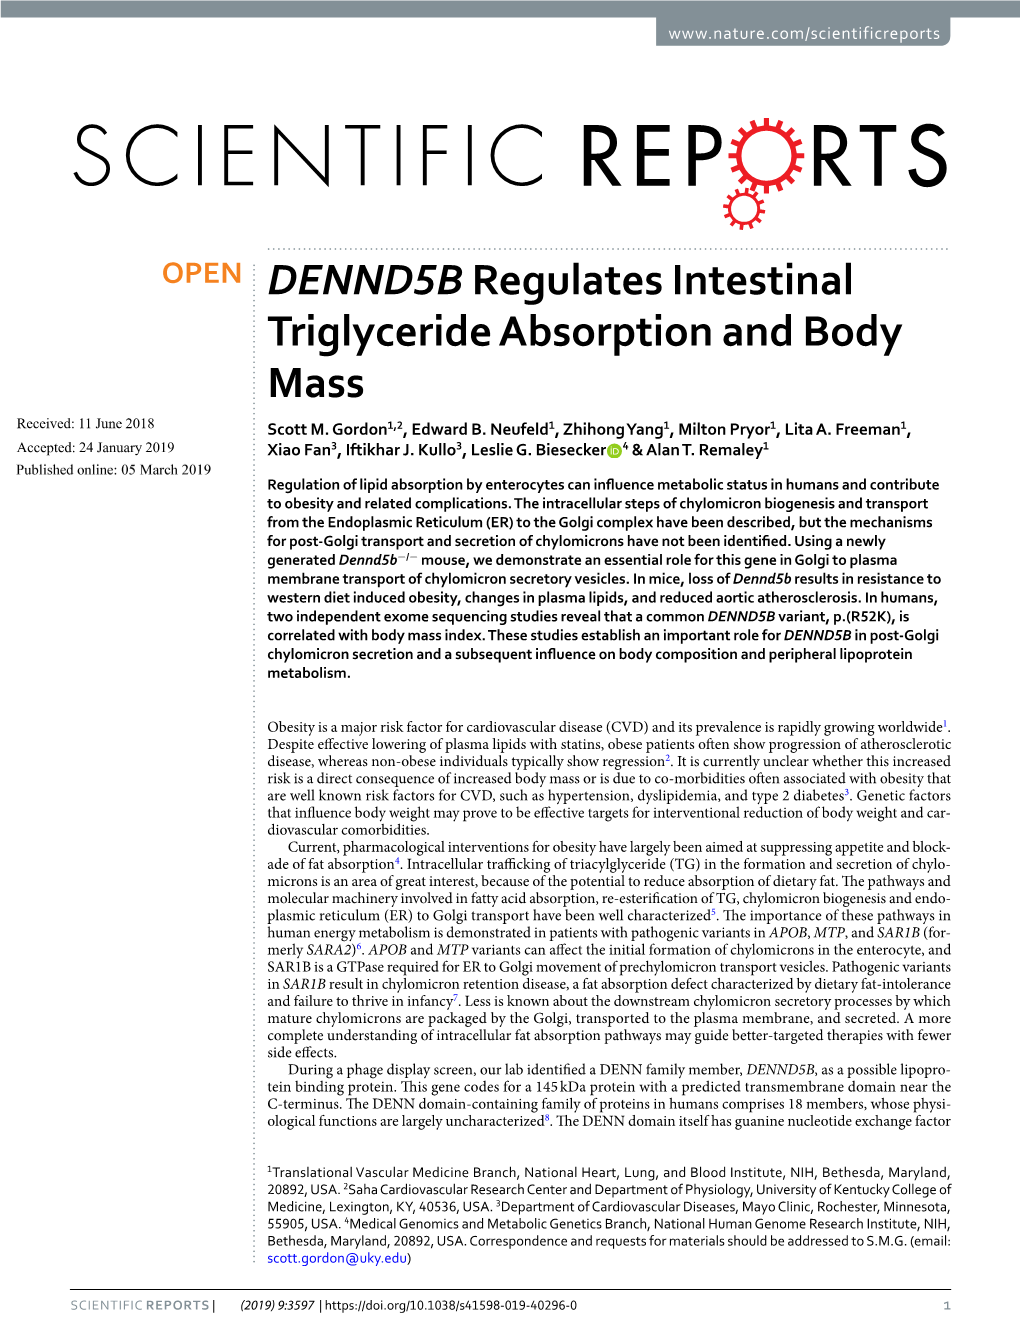 DENND5B Regulates Intestinal Triglyceride Absorption and Body Mass Received: 11 June 2018 Scott M